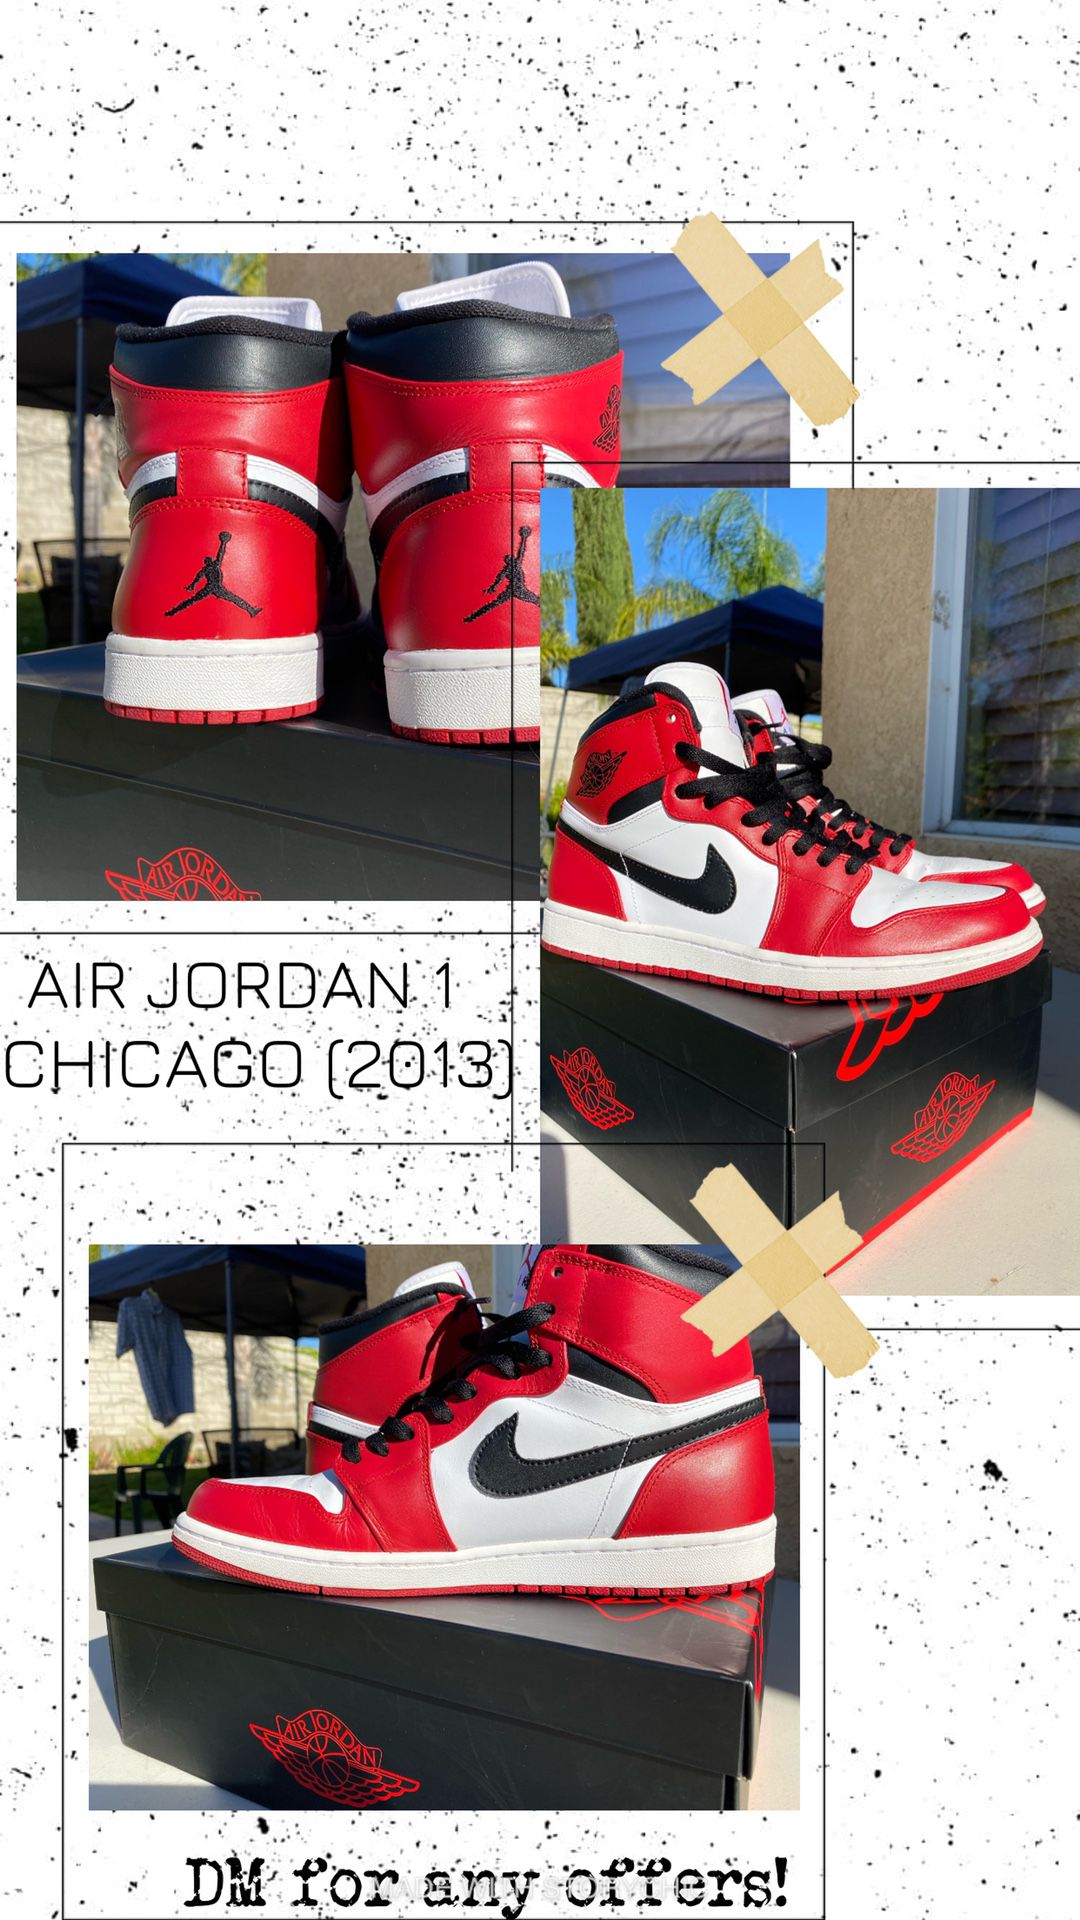 JORDAN 1 “Chicago” 2013 size 10 .5